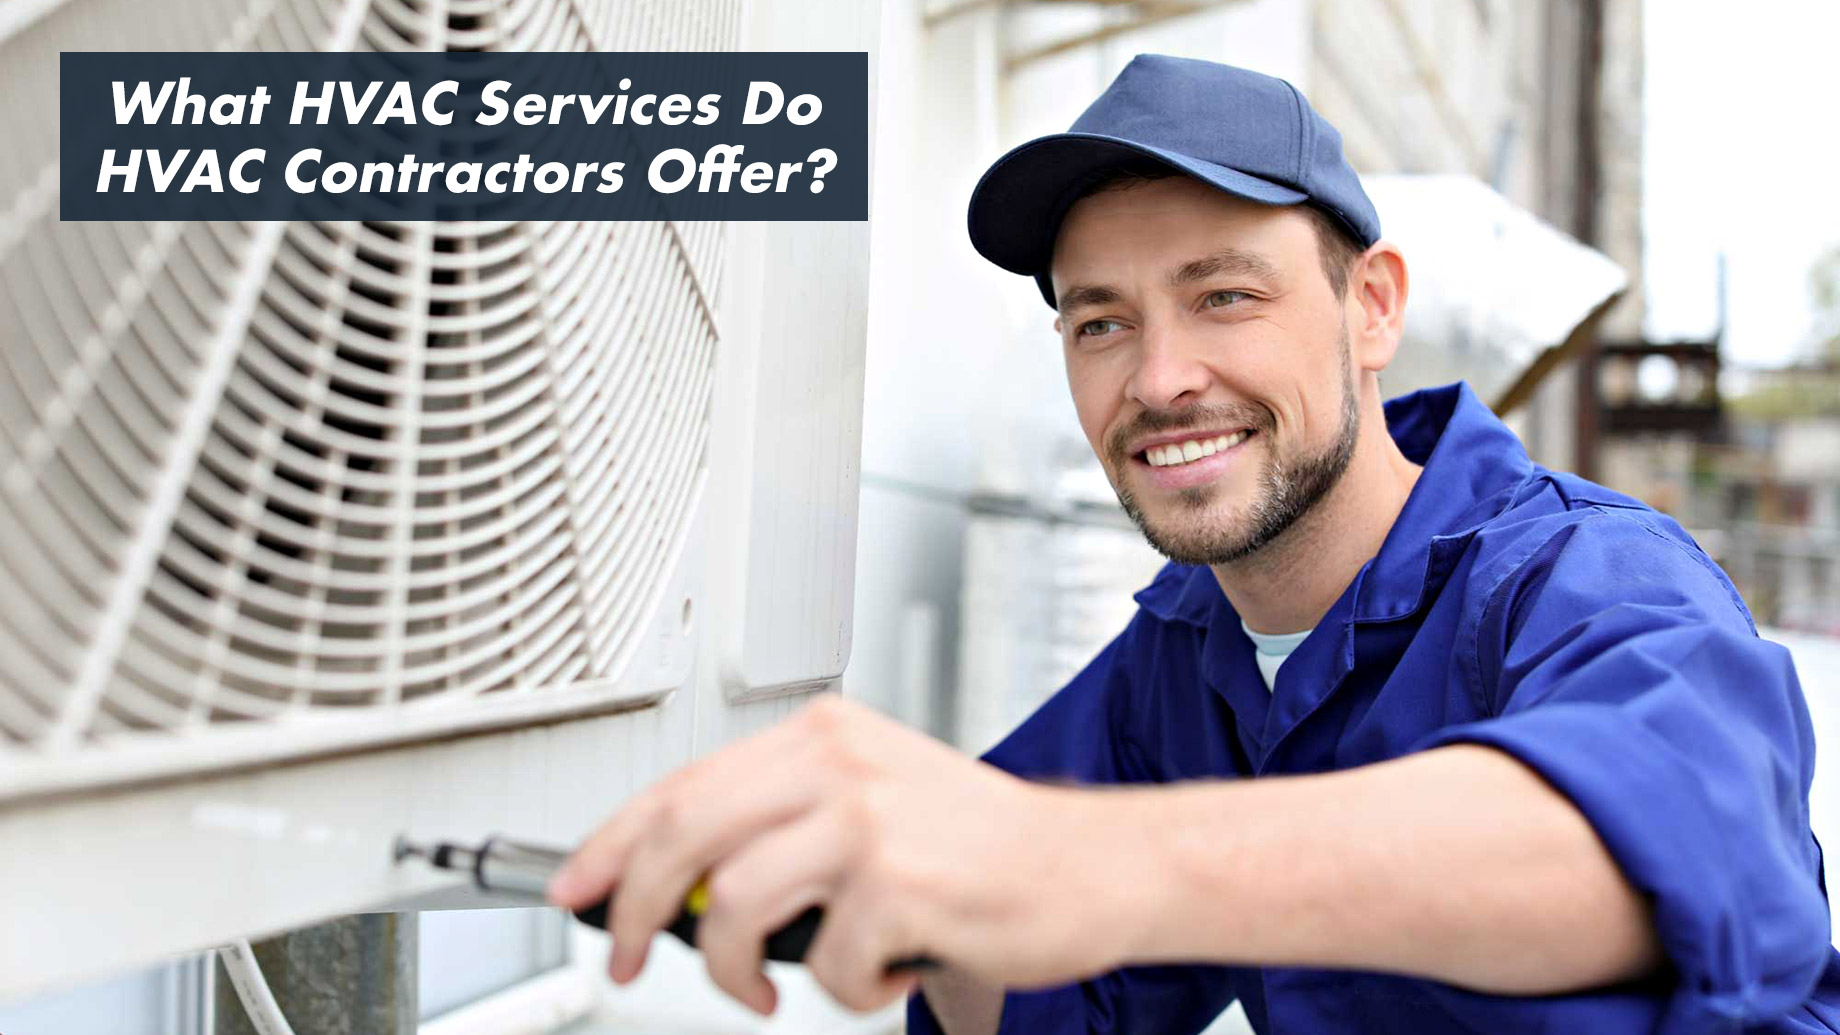 What HVAC Services Do HVAC Contractors Offer?